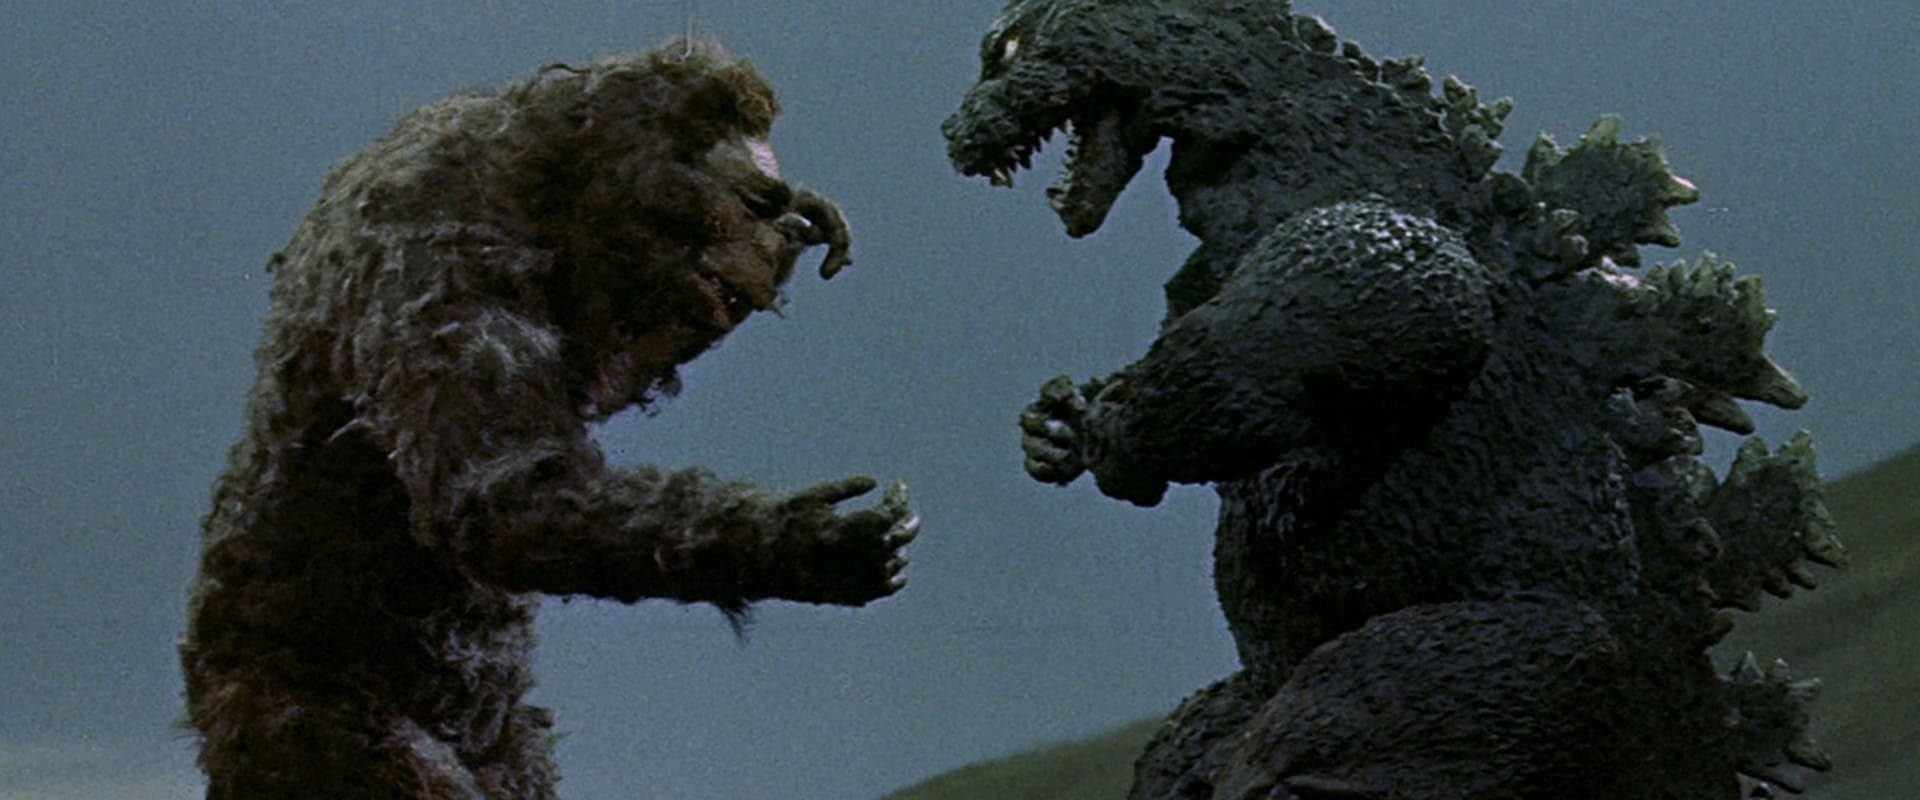 King Kong vs. Godzilla